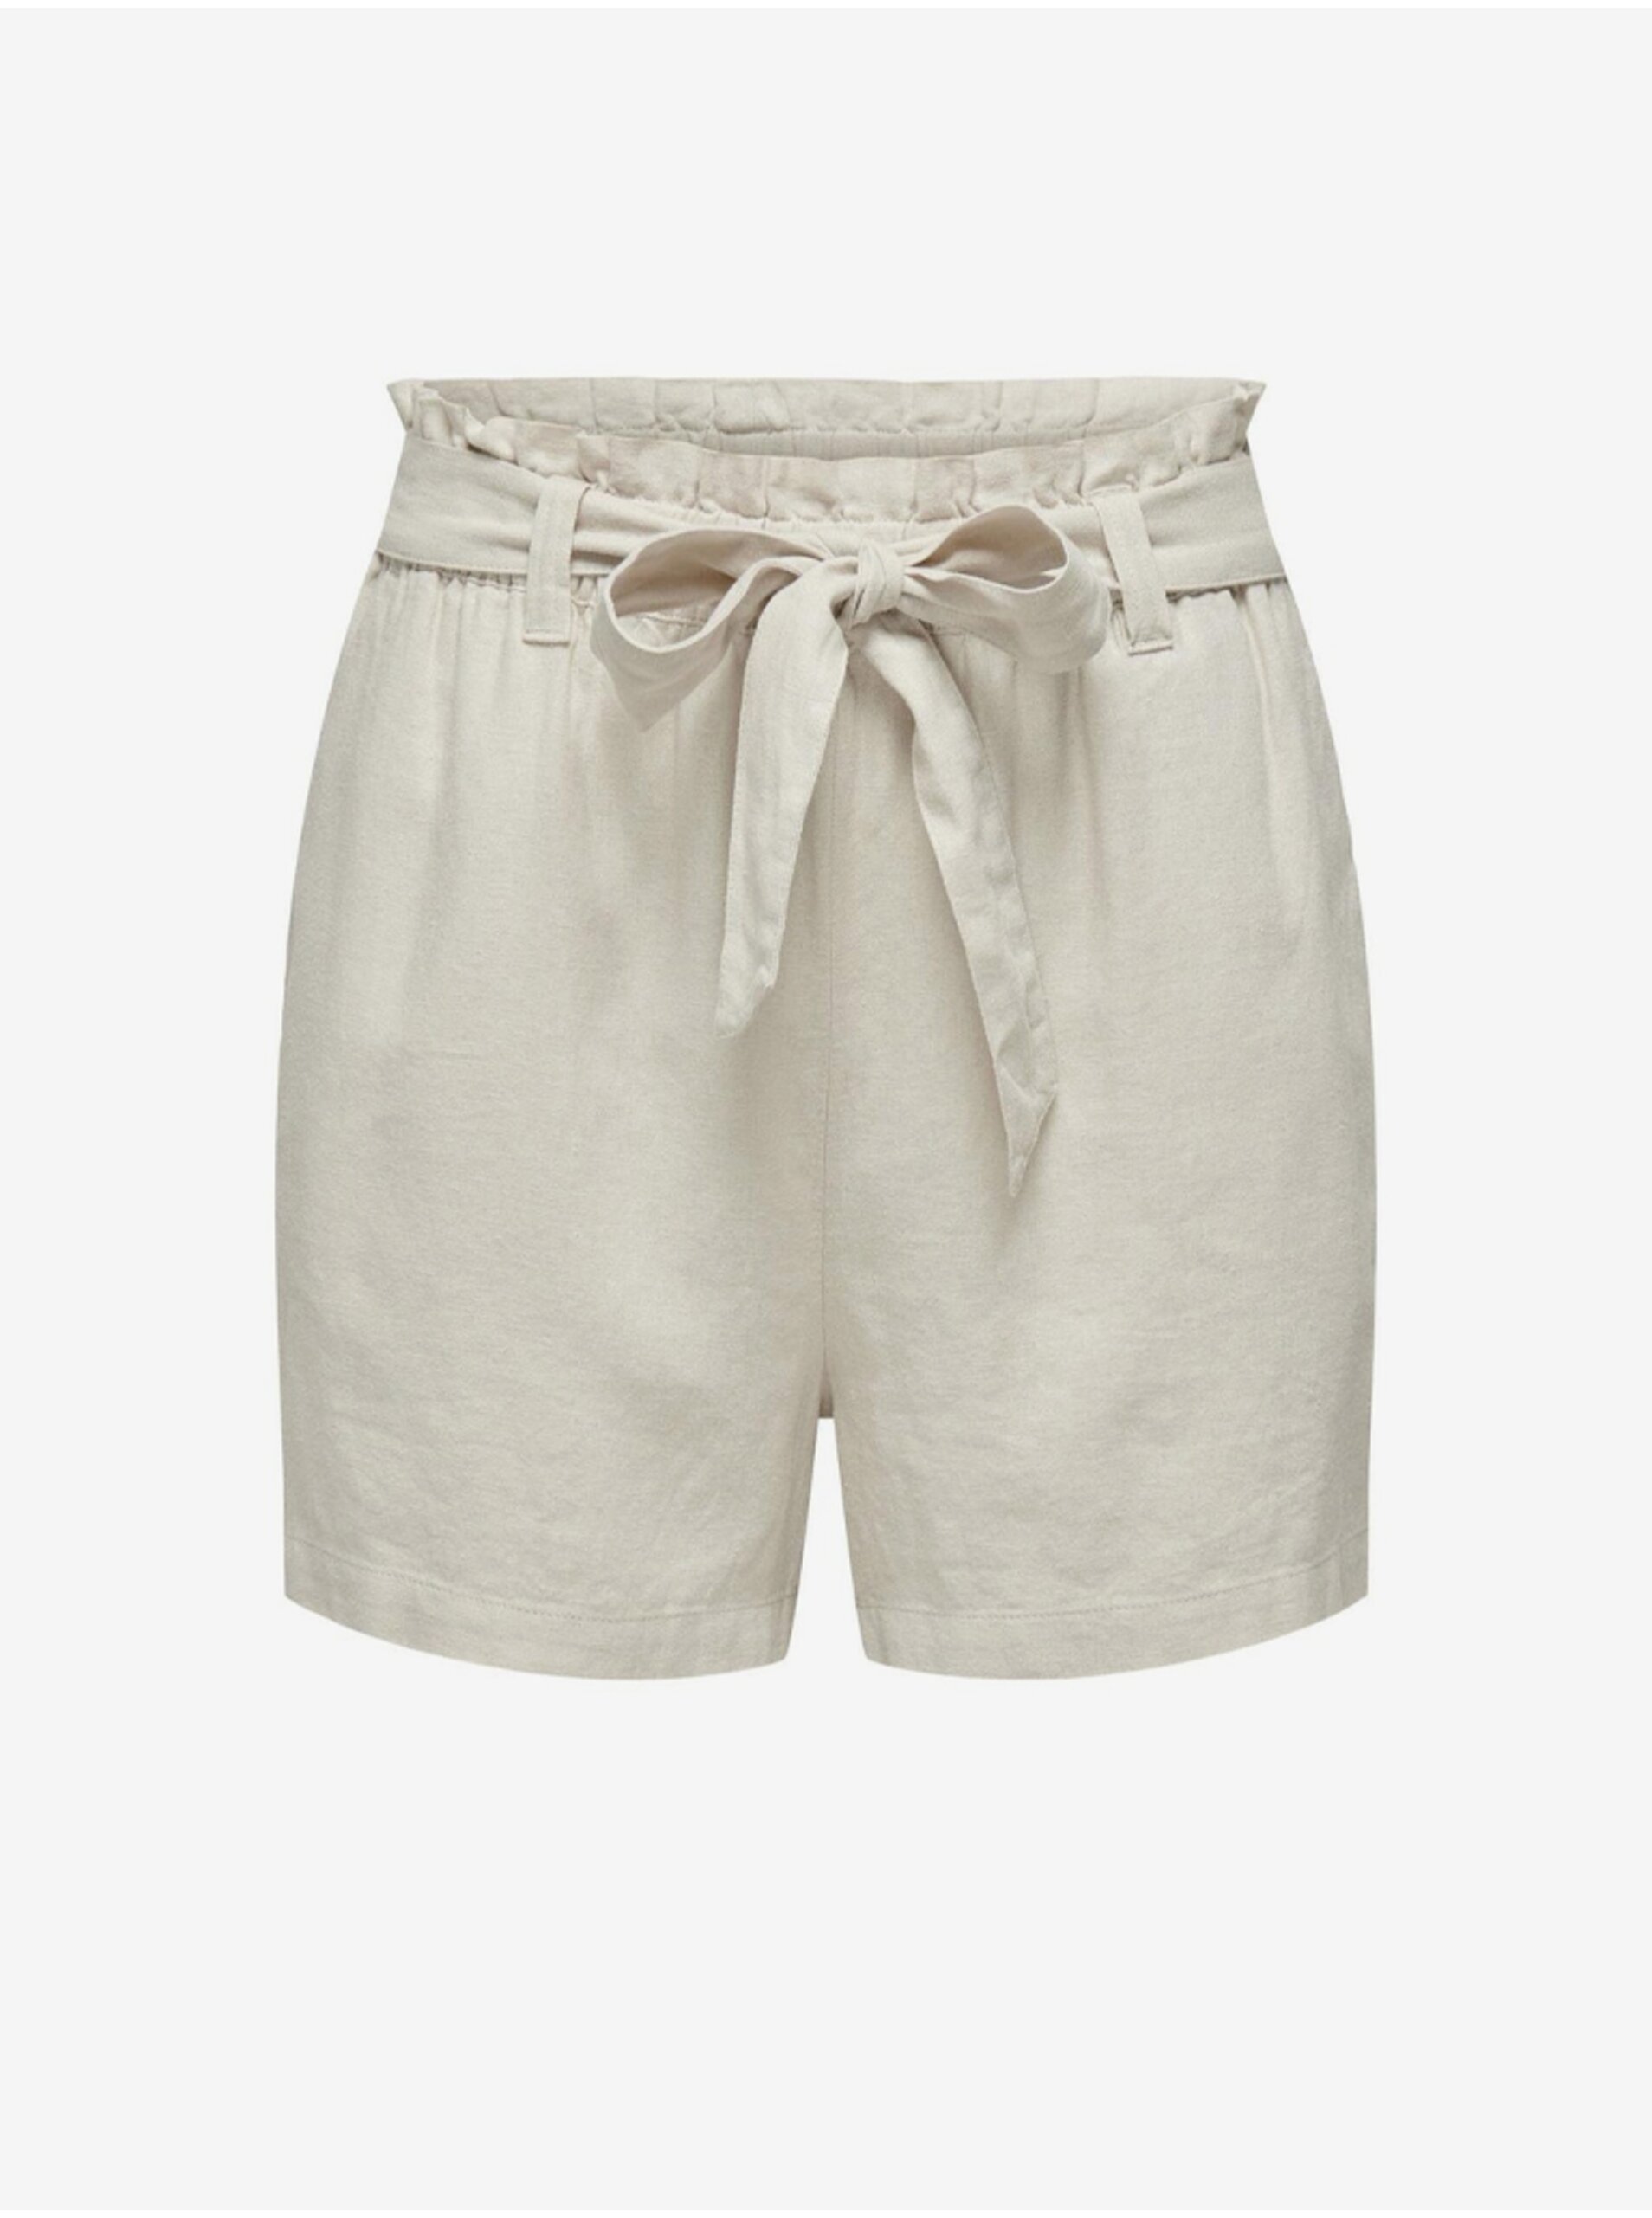 Creamy women's linen shorts JDY Say - Women